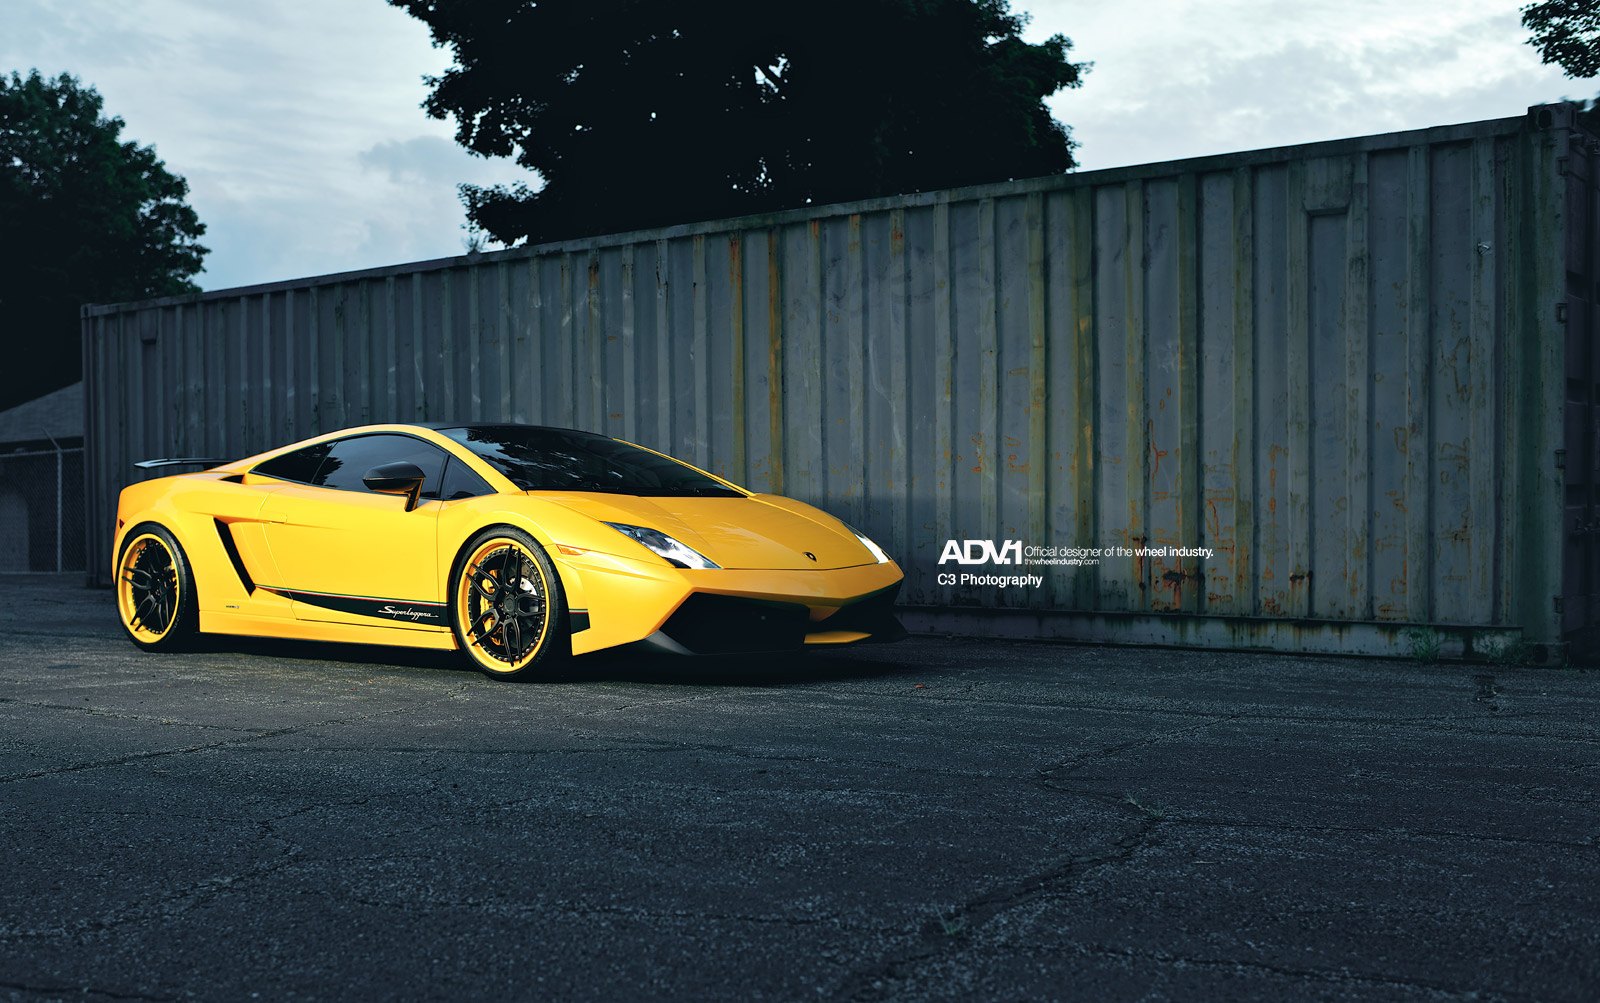 Matte Black ADV005 Wheels on Yellow Lamborghini Gallardo - Photo by ADV.1